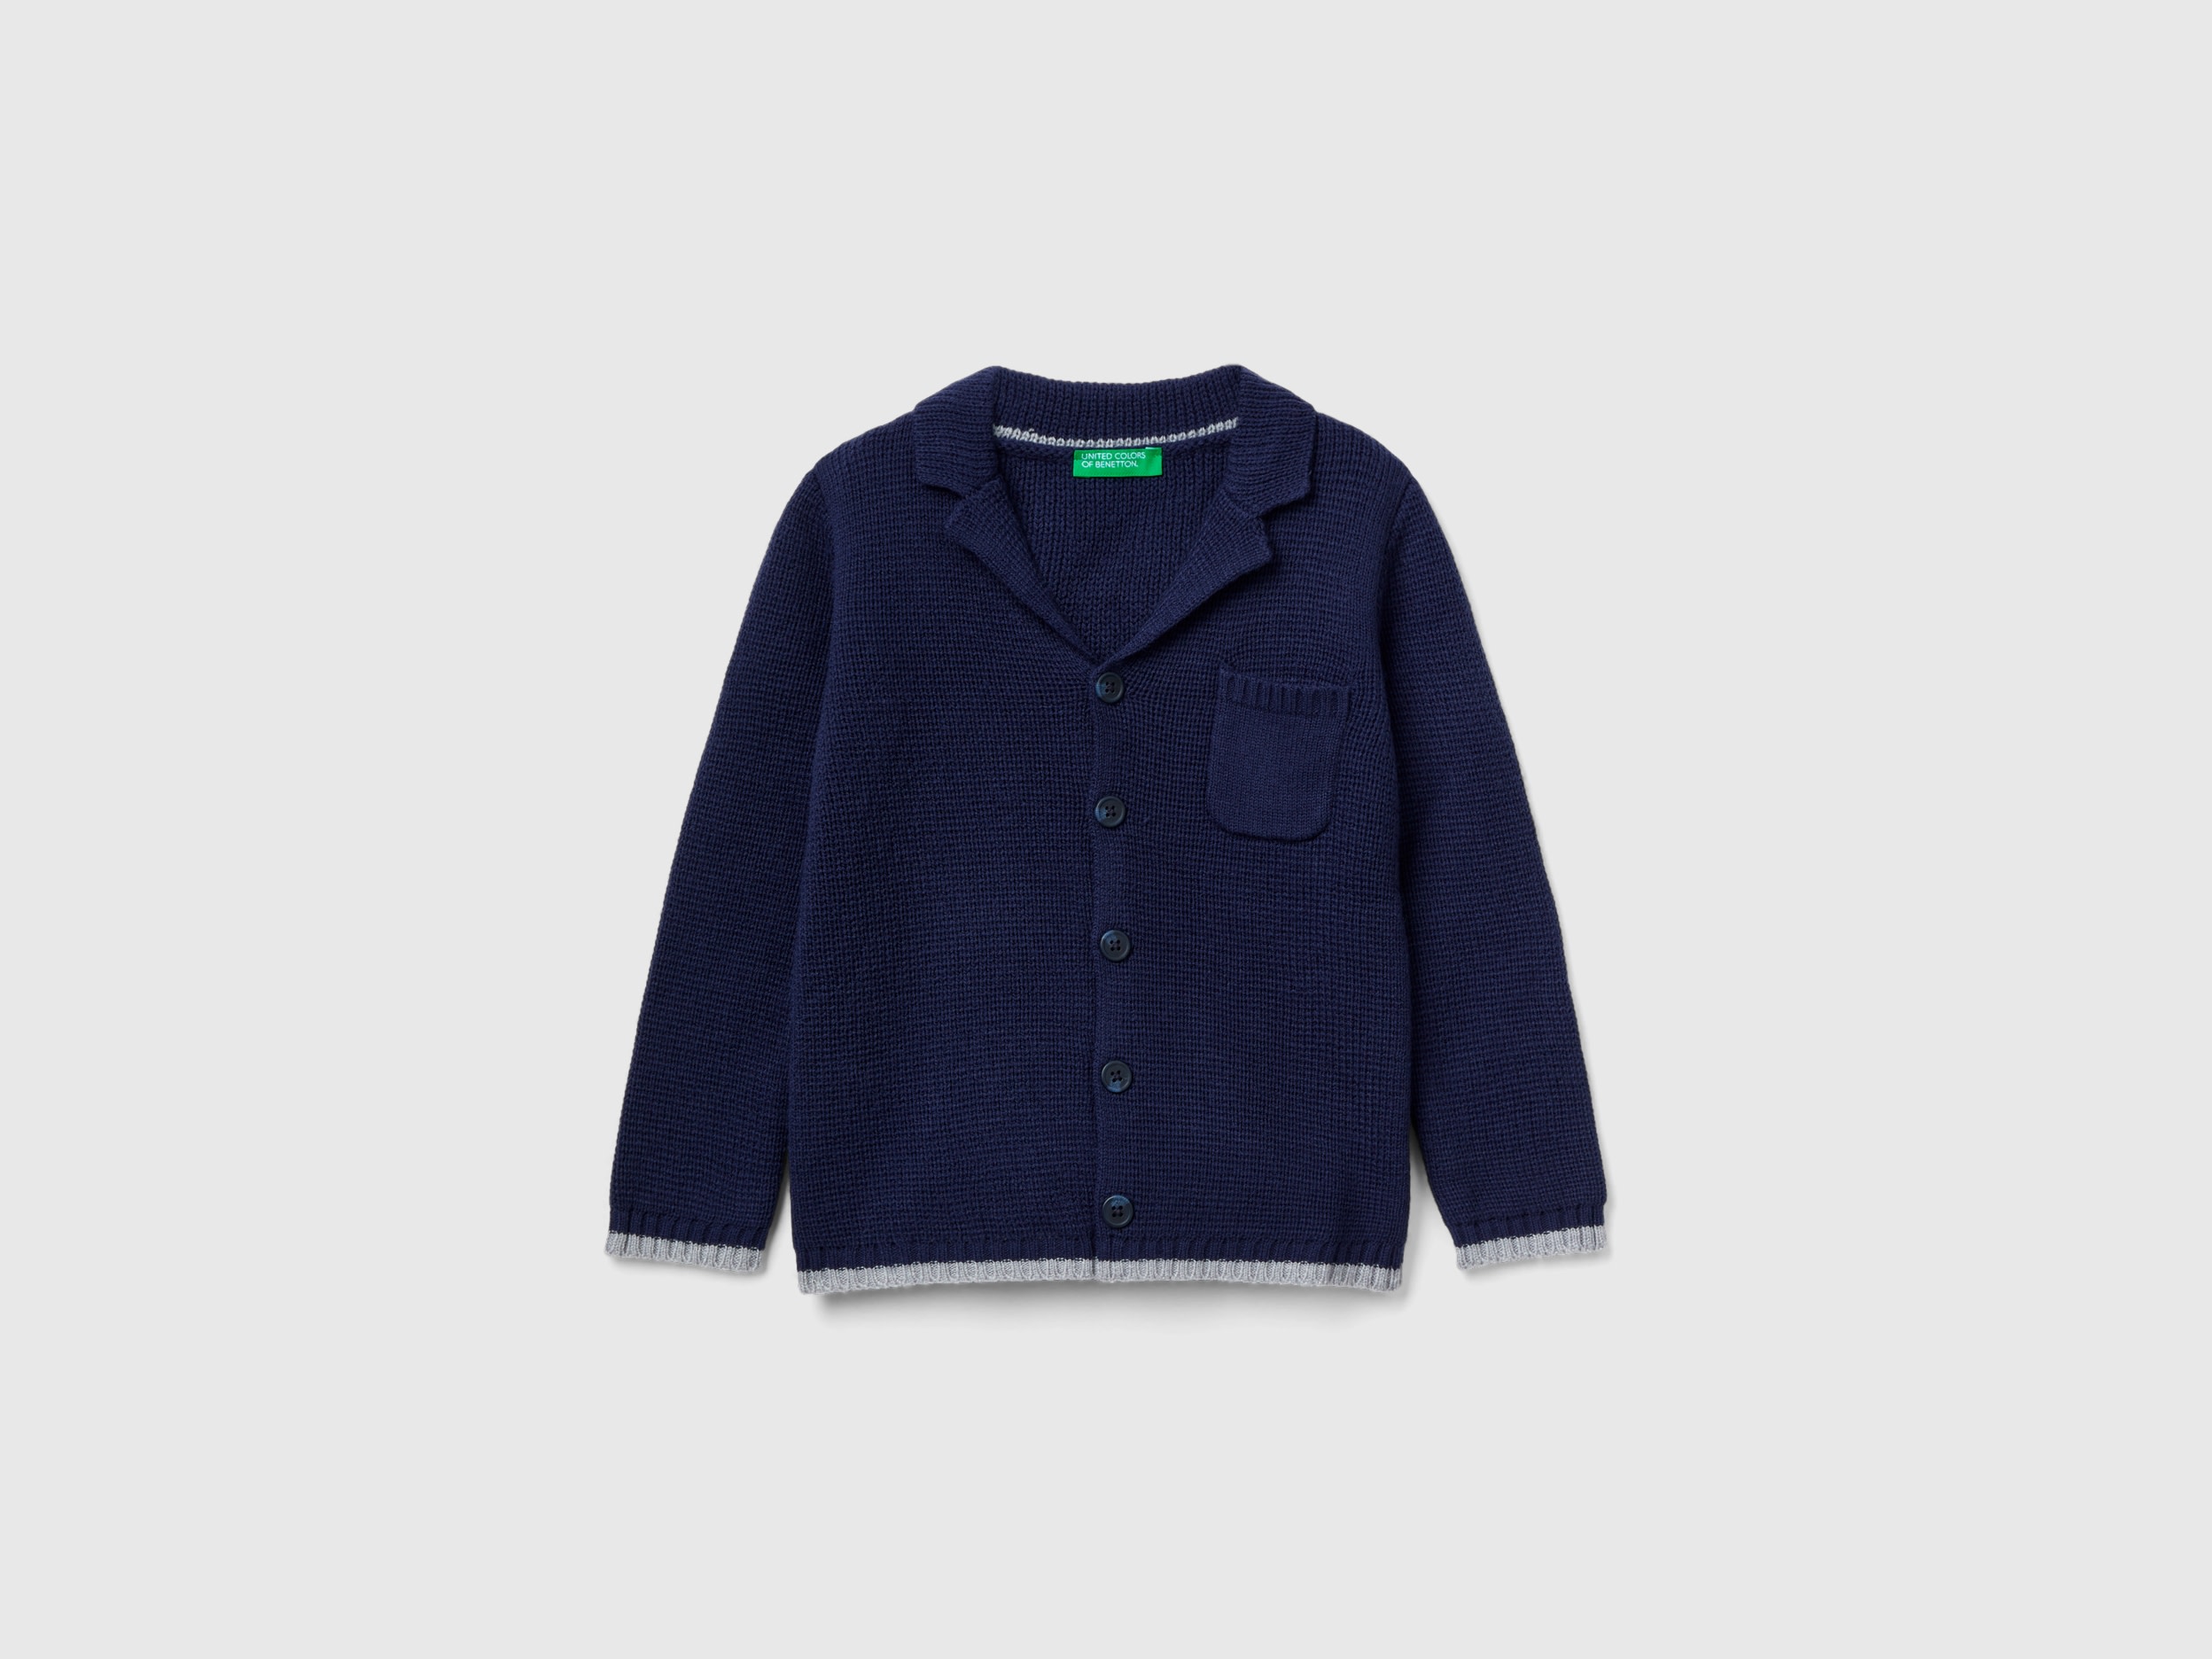 Benetton, Knit Blazer With Pocket, size 4-5, Dark Blue, Kids